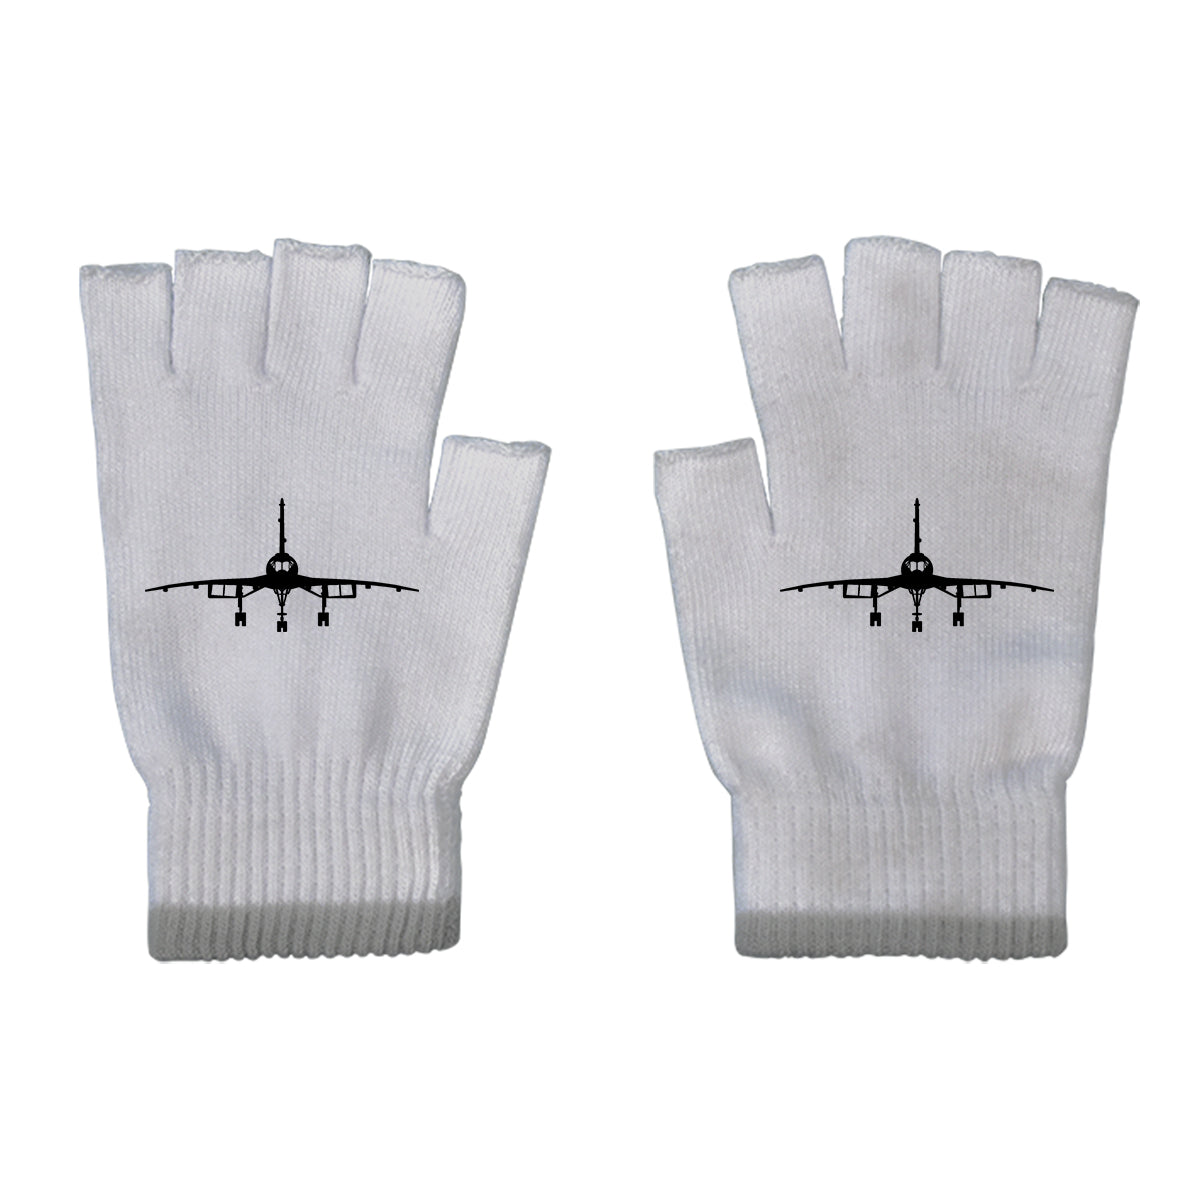 Concorde Silhouette Designed Cut Gloves